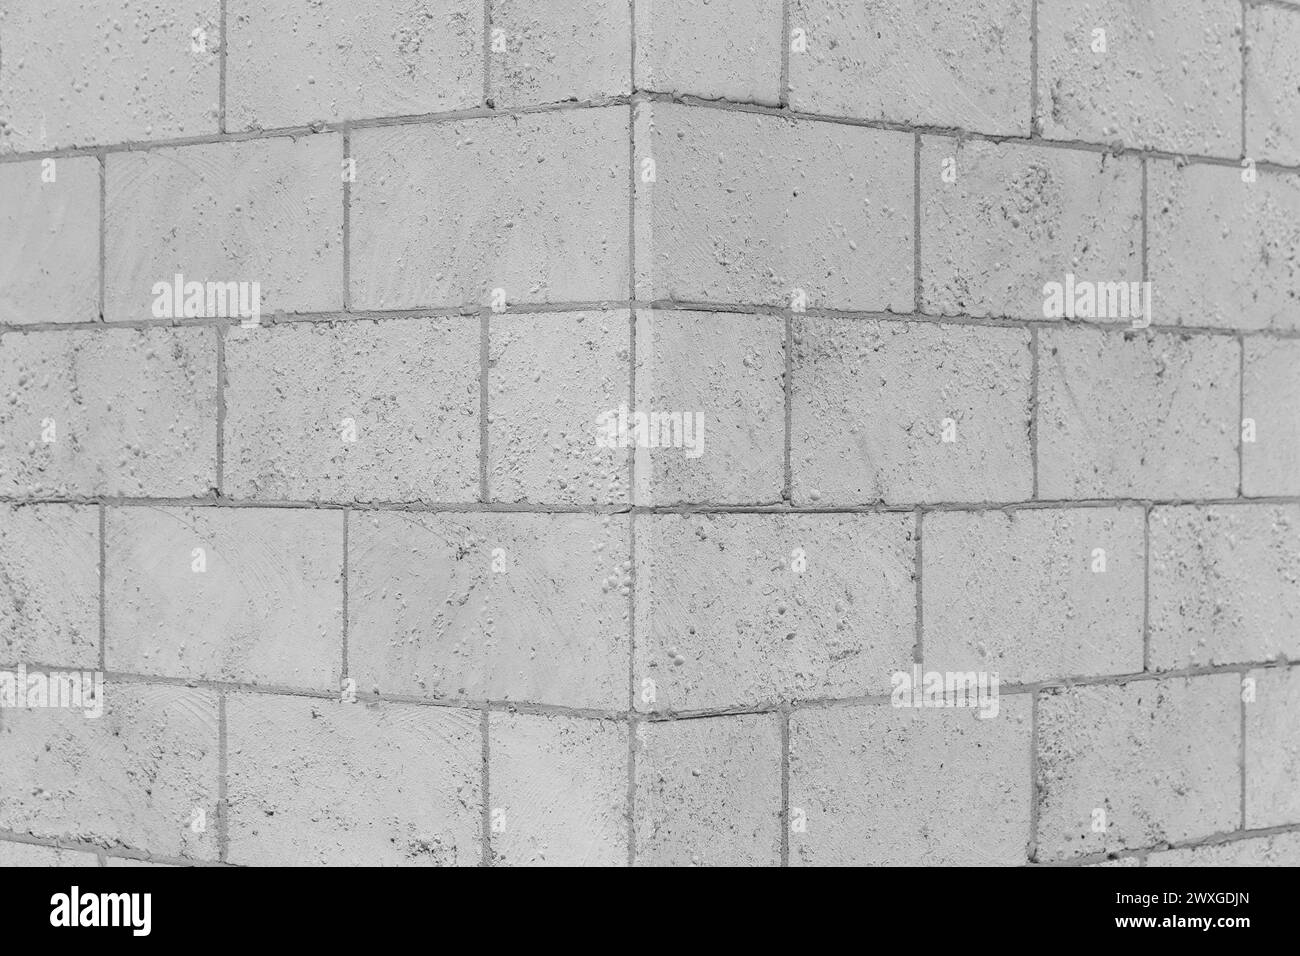 Brickwork brick masonry wall corner joint background architecture facade exterior building sand gray limestone shellbrick. Stock Photo